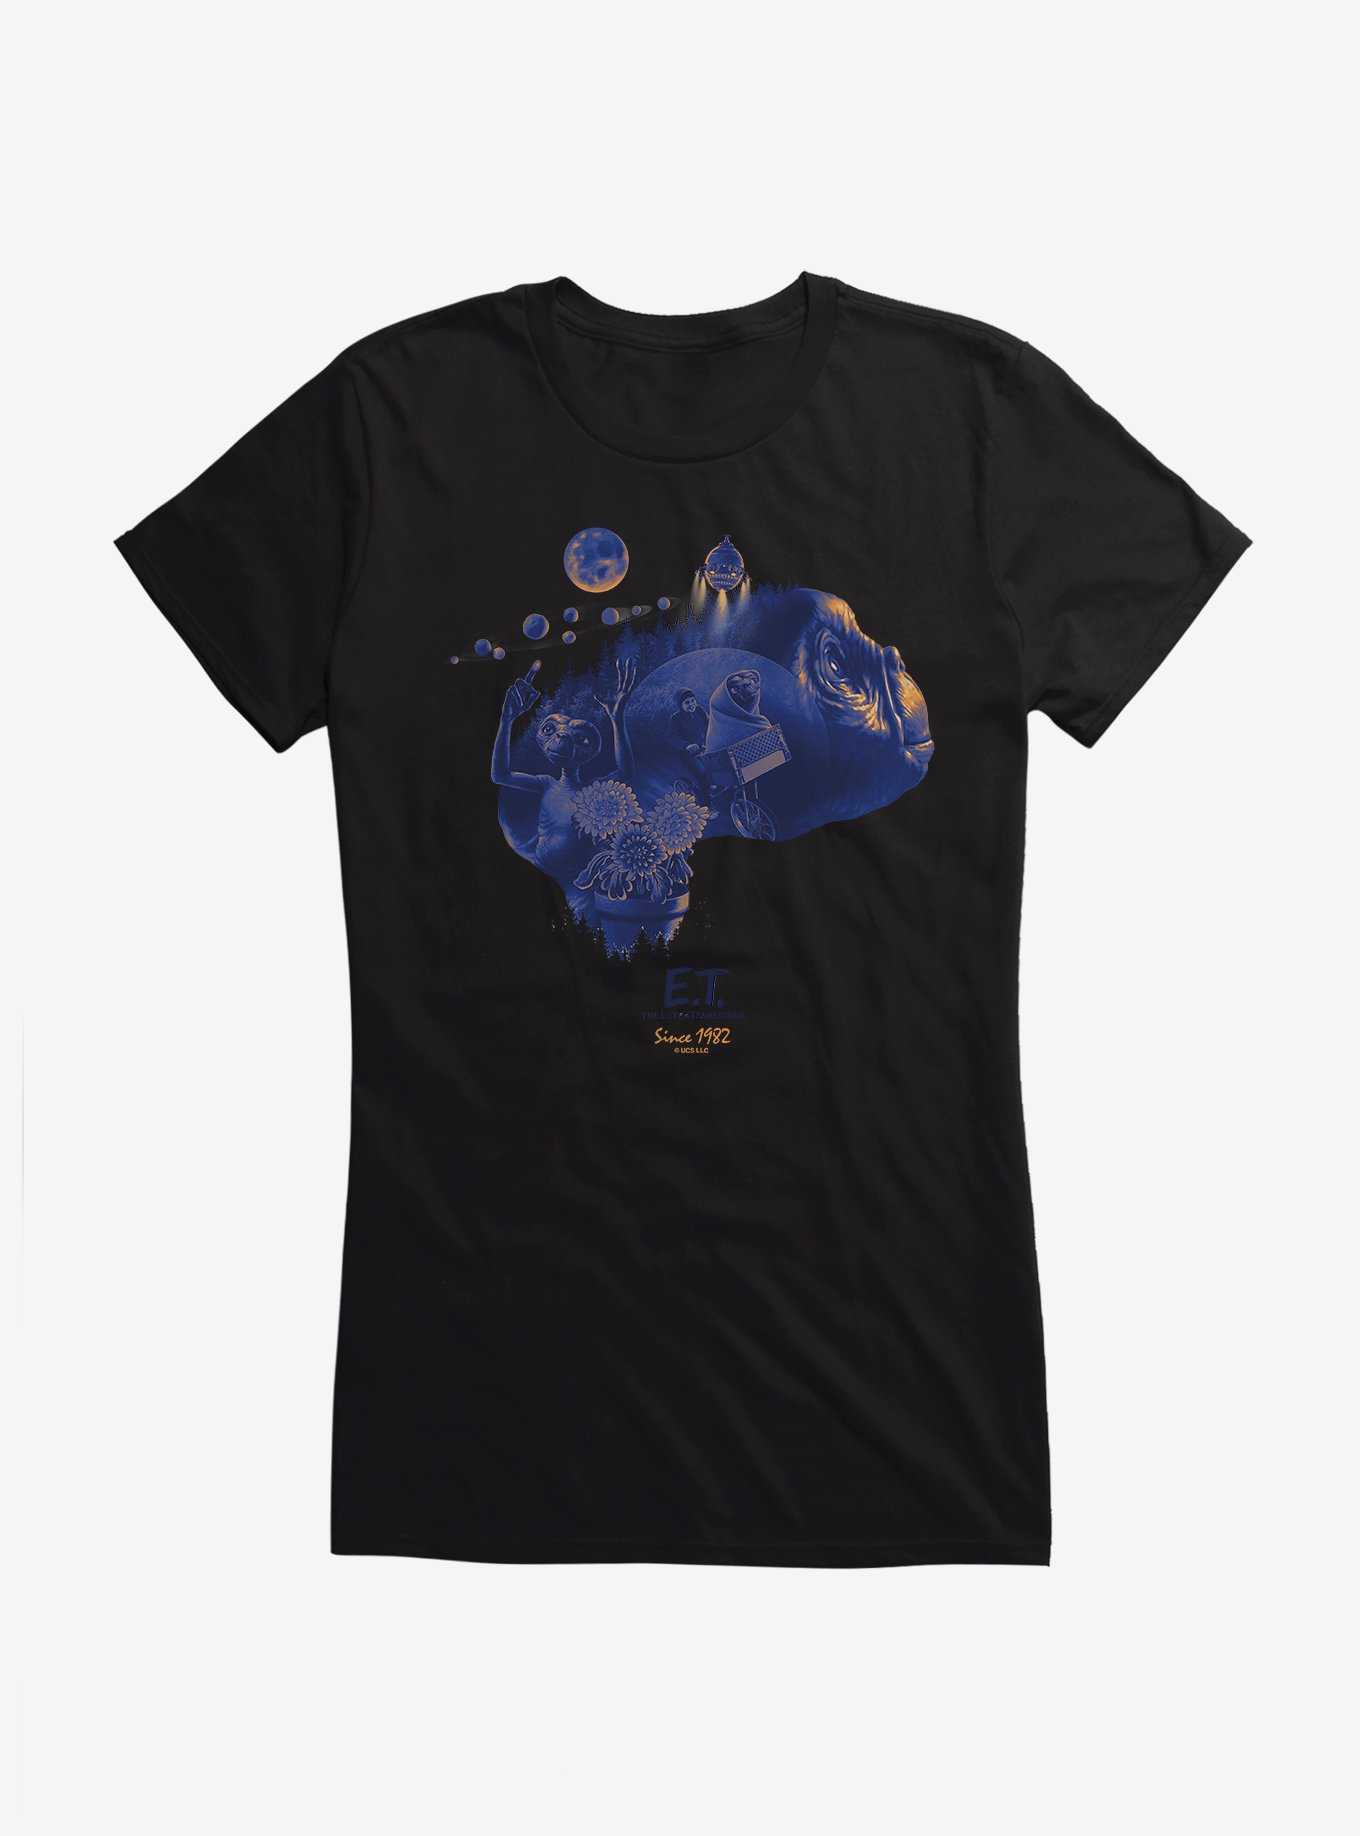 E.T. 40th Anniversary Collage Art Graphic Girls T-Shirt, BLACK, hi-res